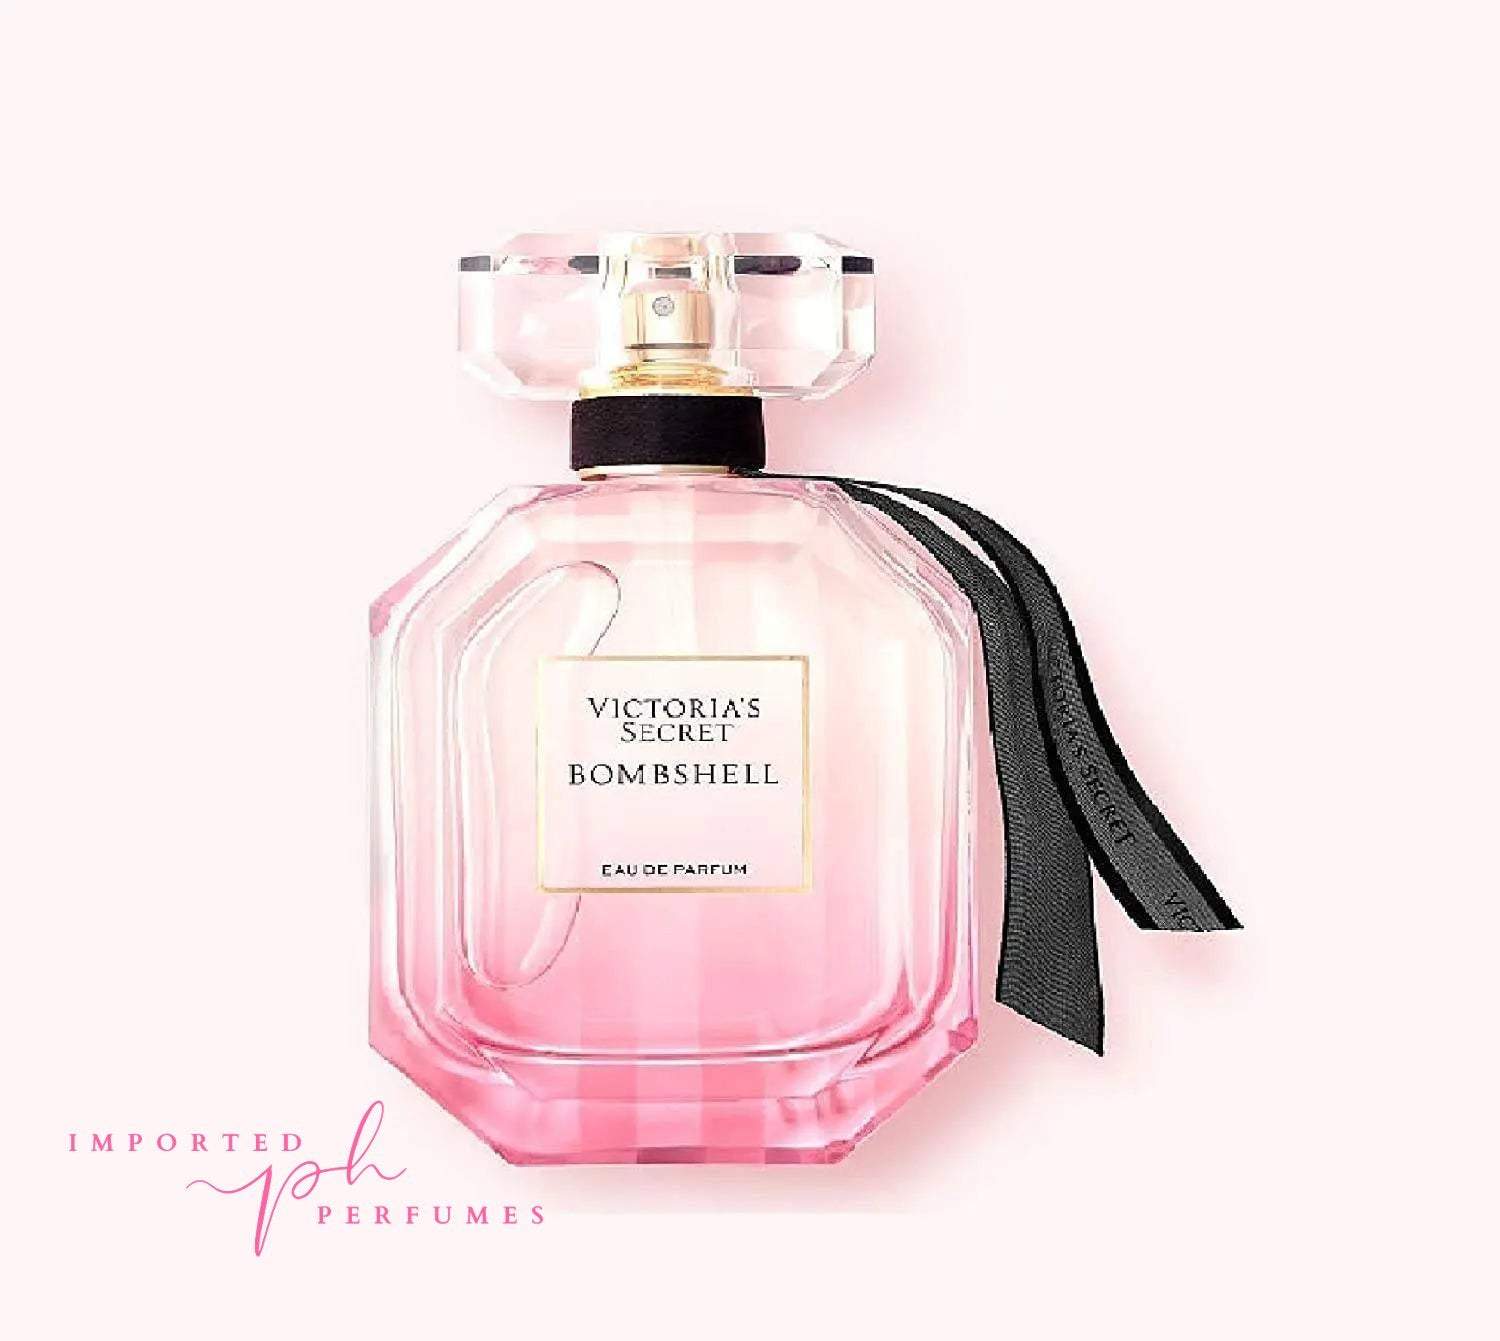 Bombshell Victoria's Secret For Women 100ml Eau De Parfum-Imported Perfumes Co-100ml,bomb,shell,Victoria Secret,women